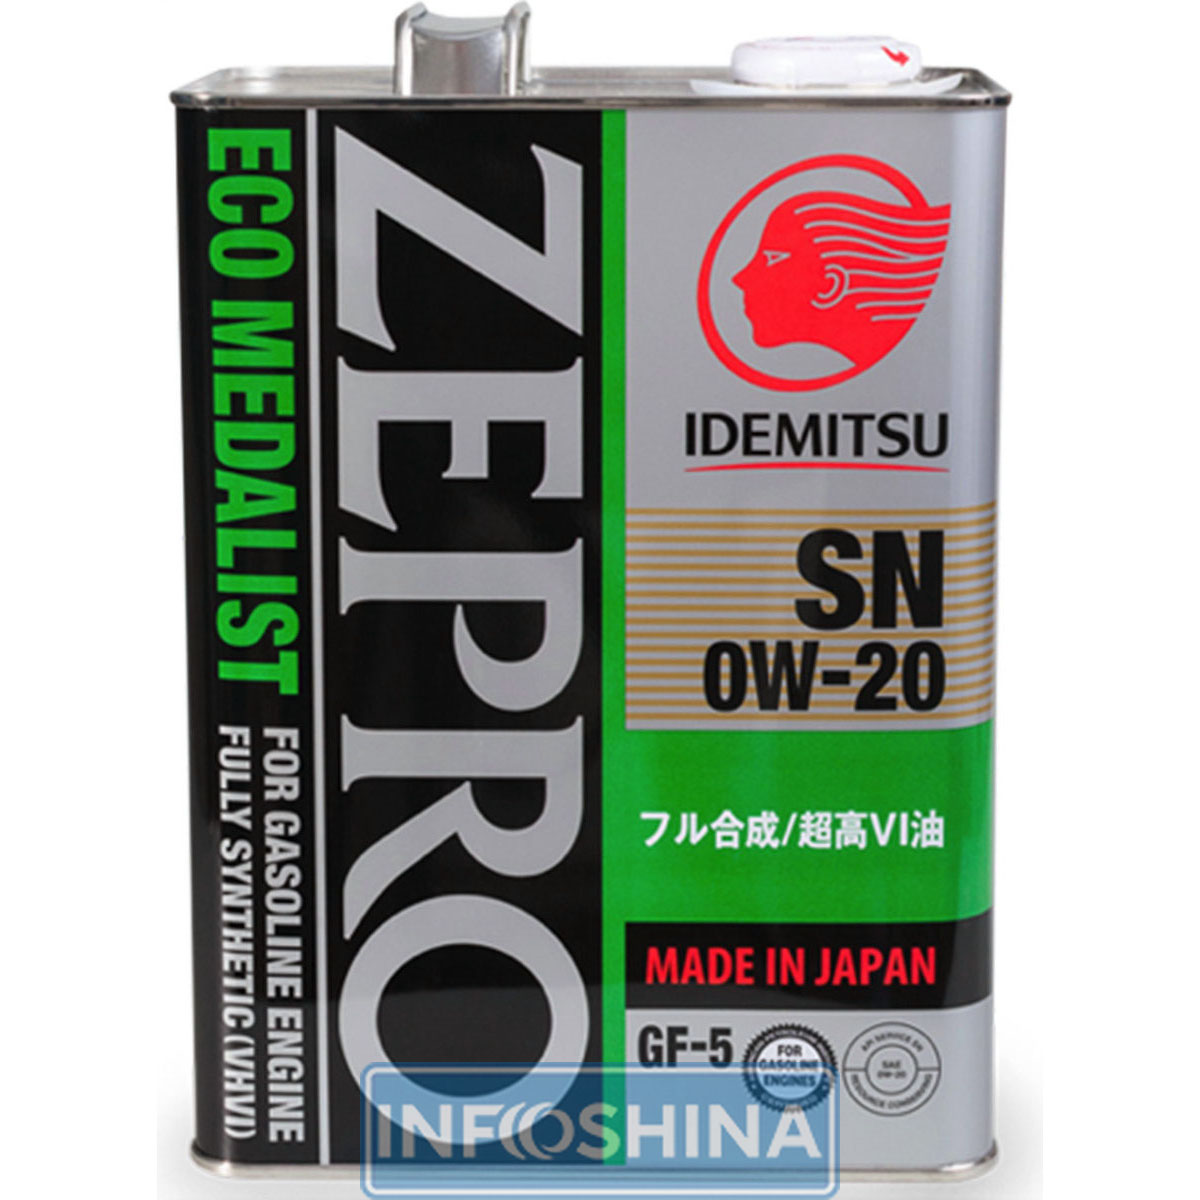 Купить масло IDEMITSU Zepro Eco Medalist 0W-20 SN/GF-5 (4л)